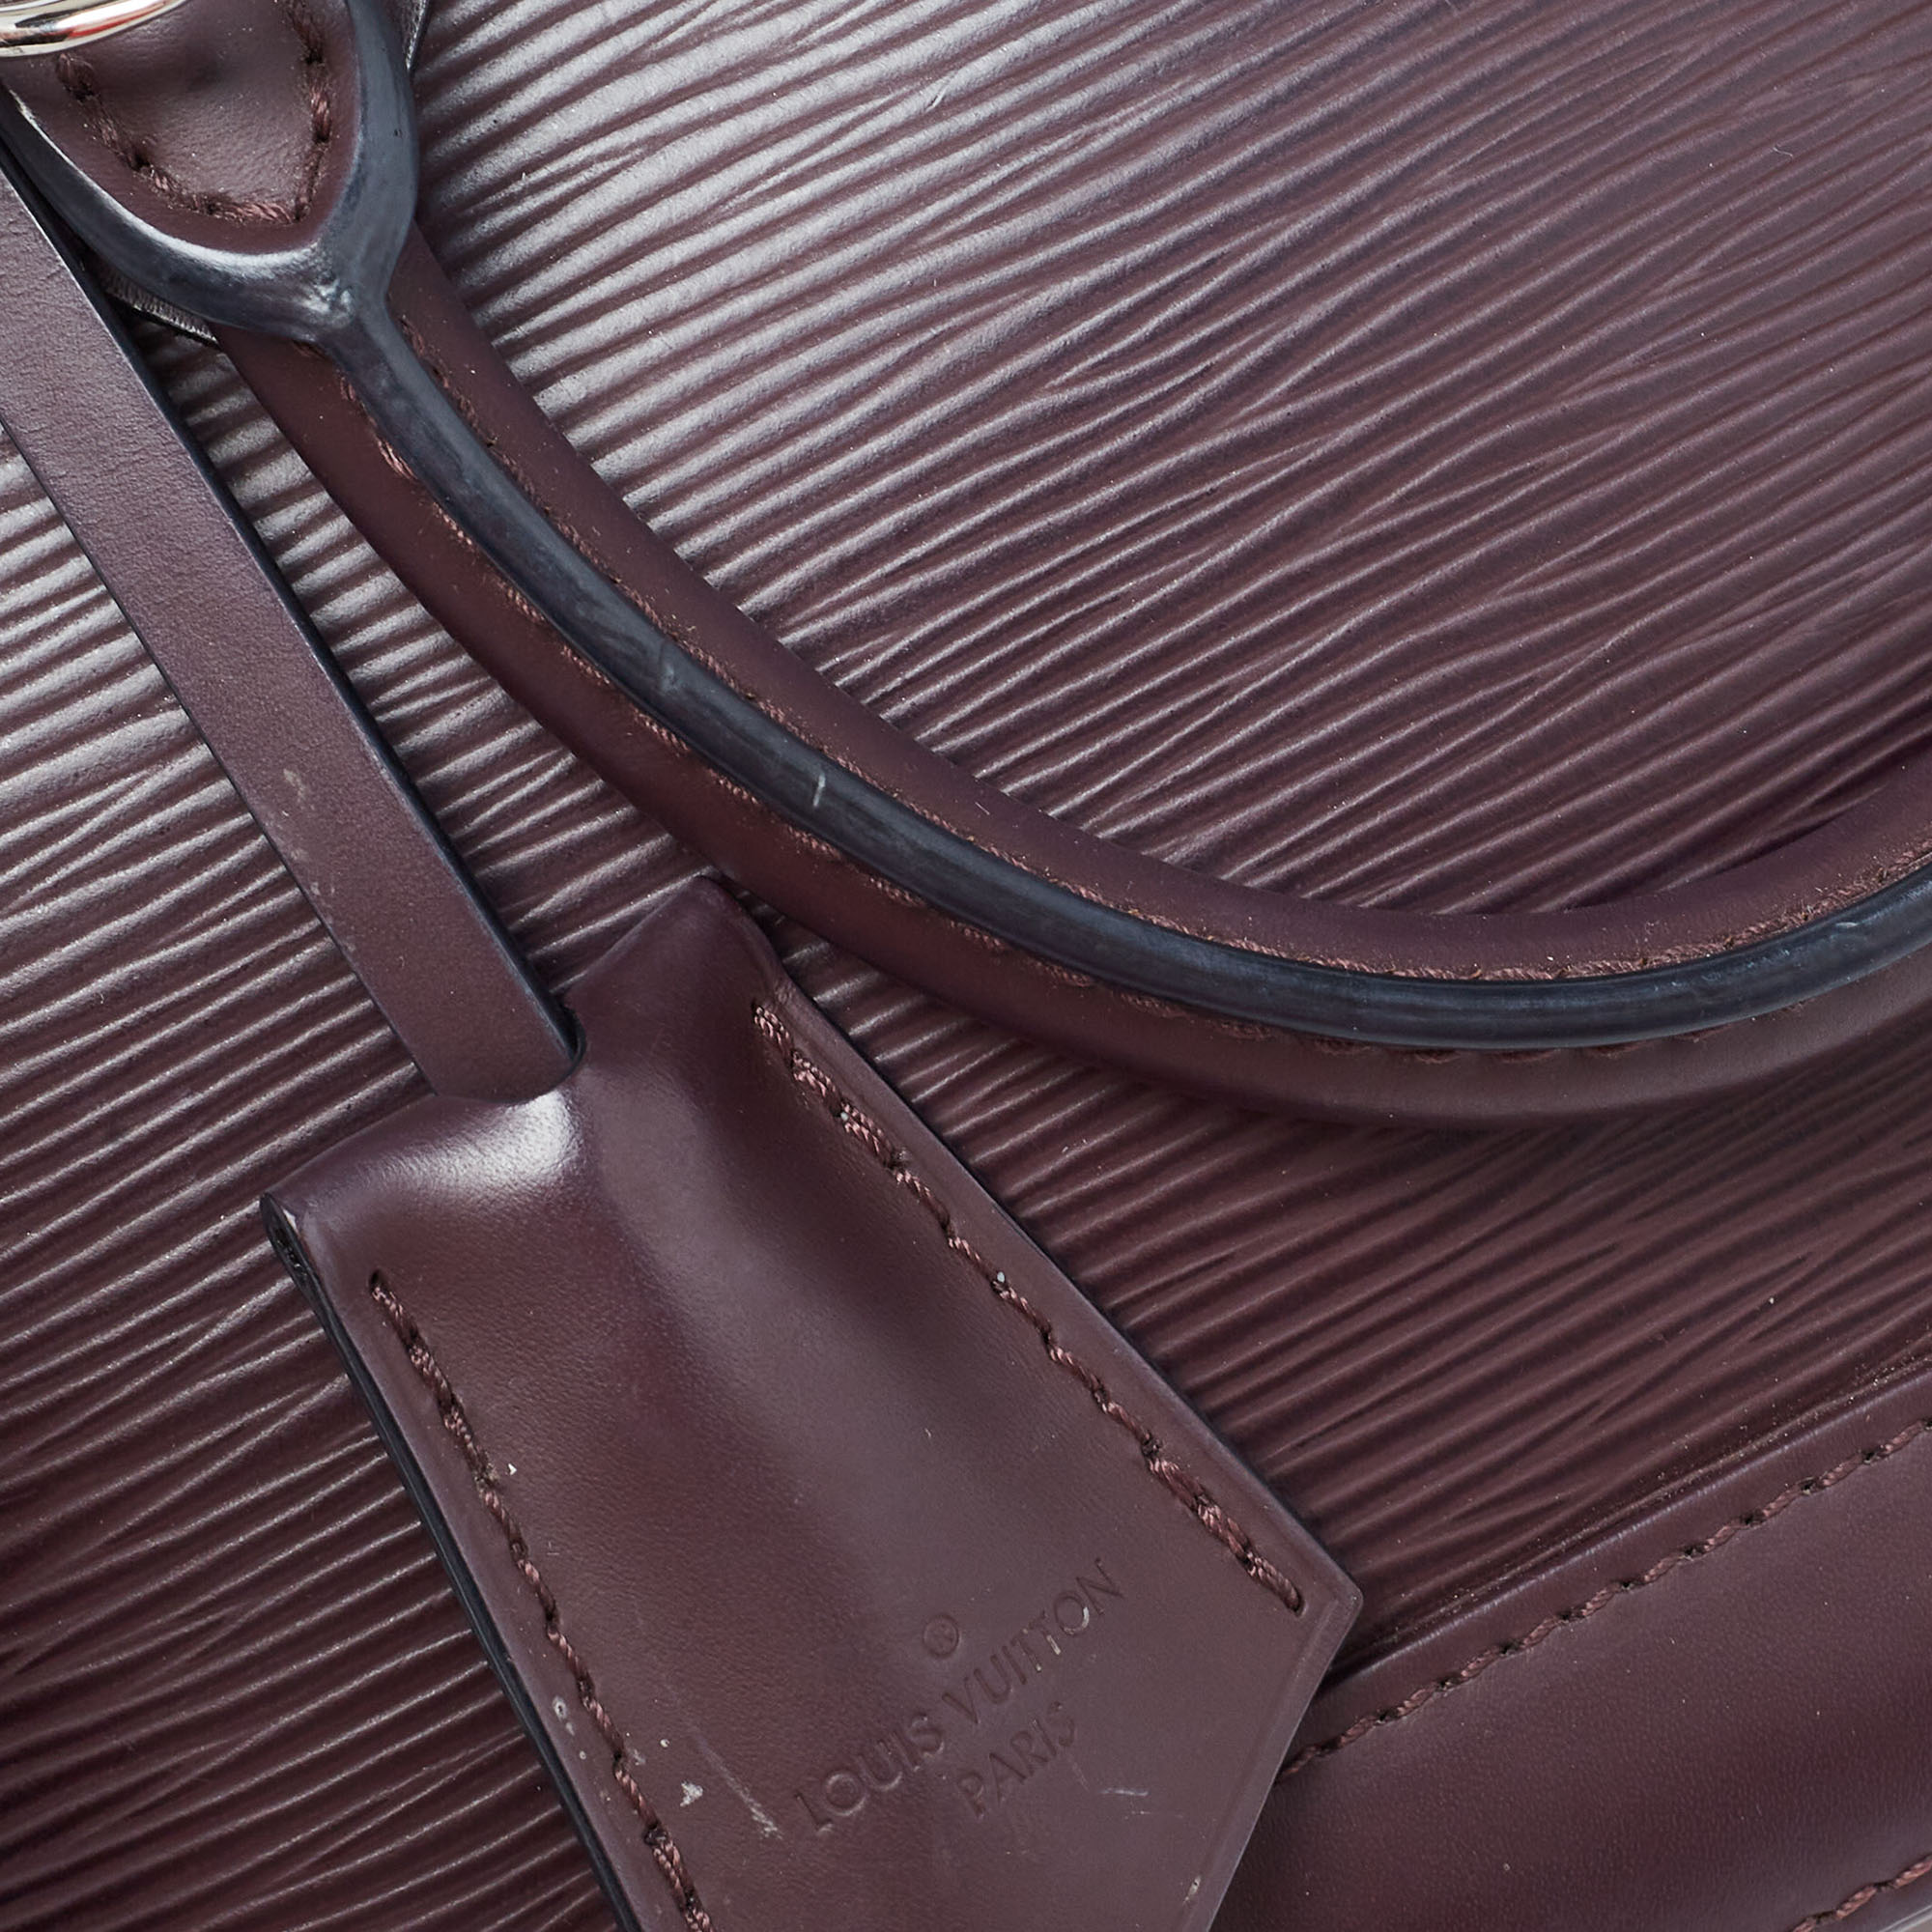 Louis Vuitton Quetsche Epi Leather Alma BB Bag